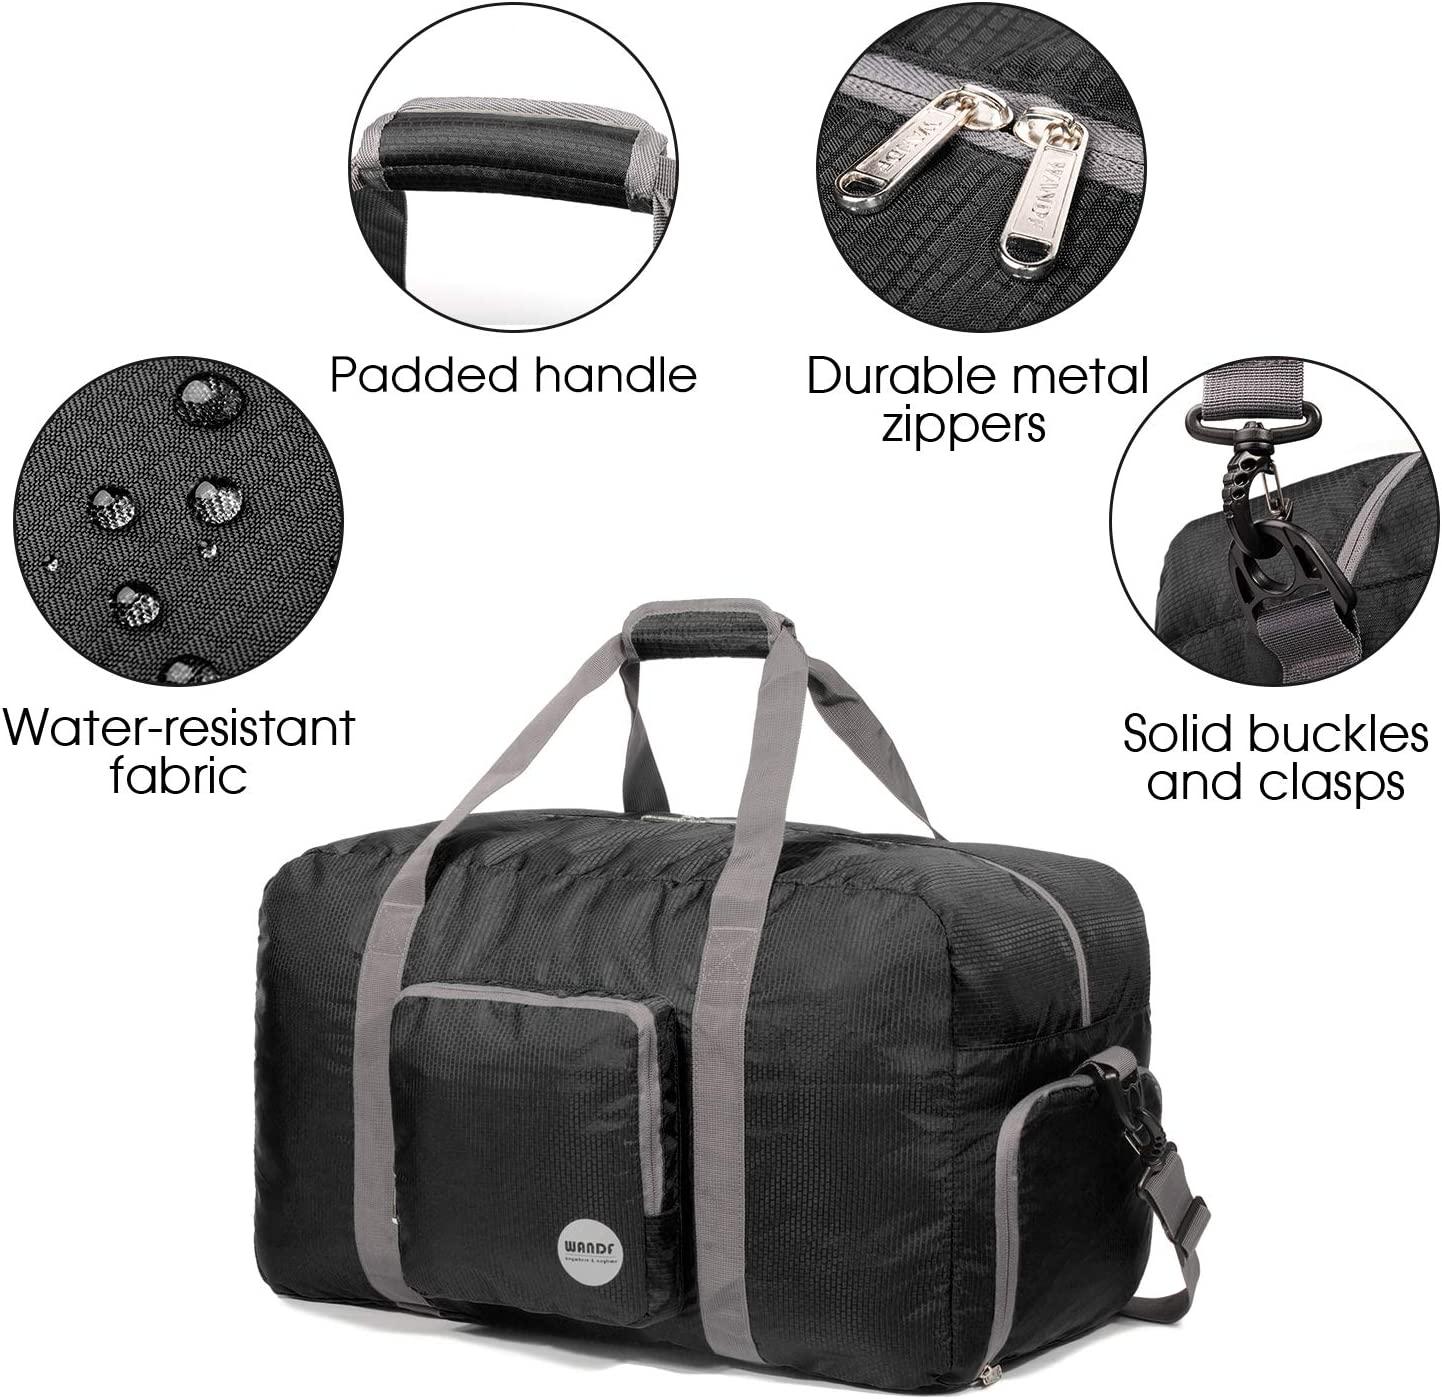 Foldable Duffle Bag 24 28 32 36 60L 80L 100L 120L for Travel Gym Sports  Lightweight Luggage Duffel By WANDF